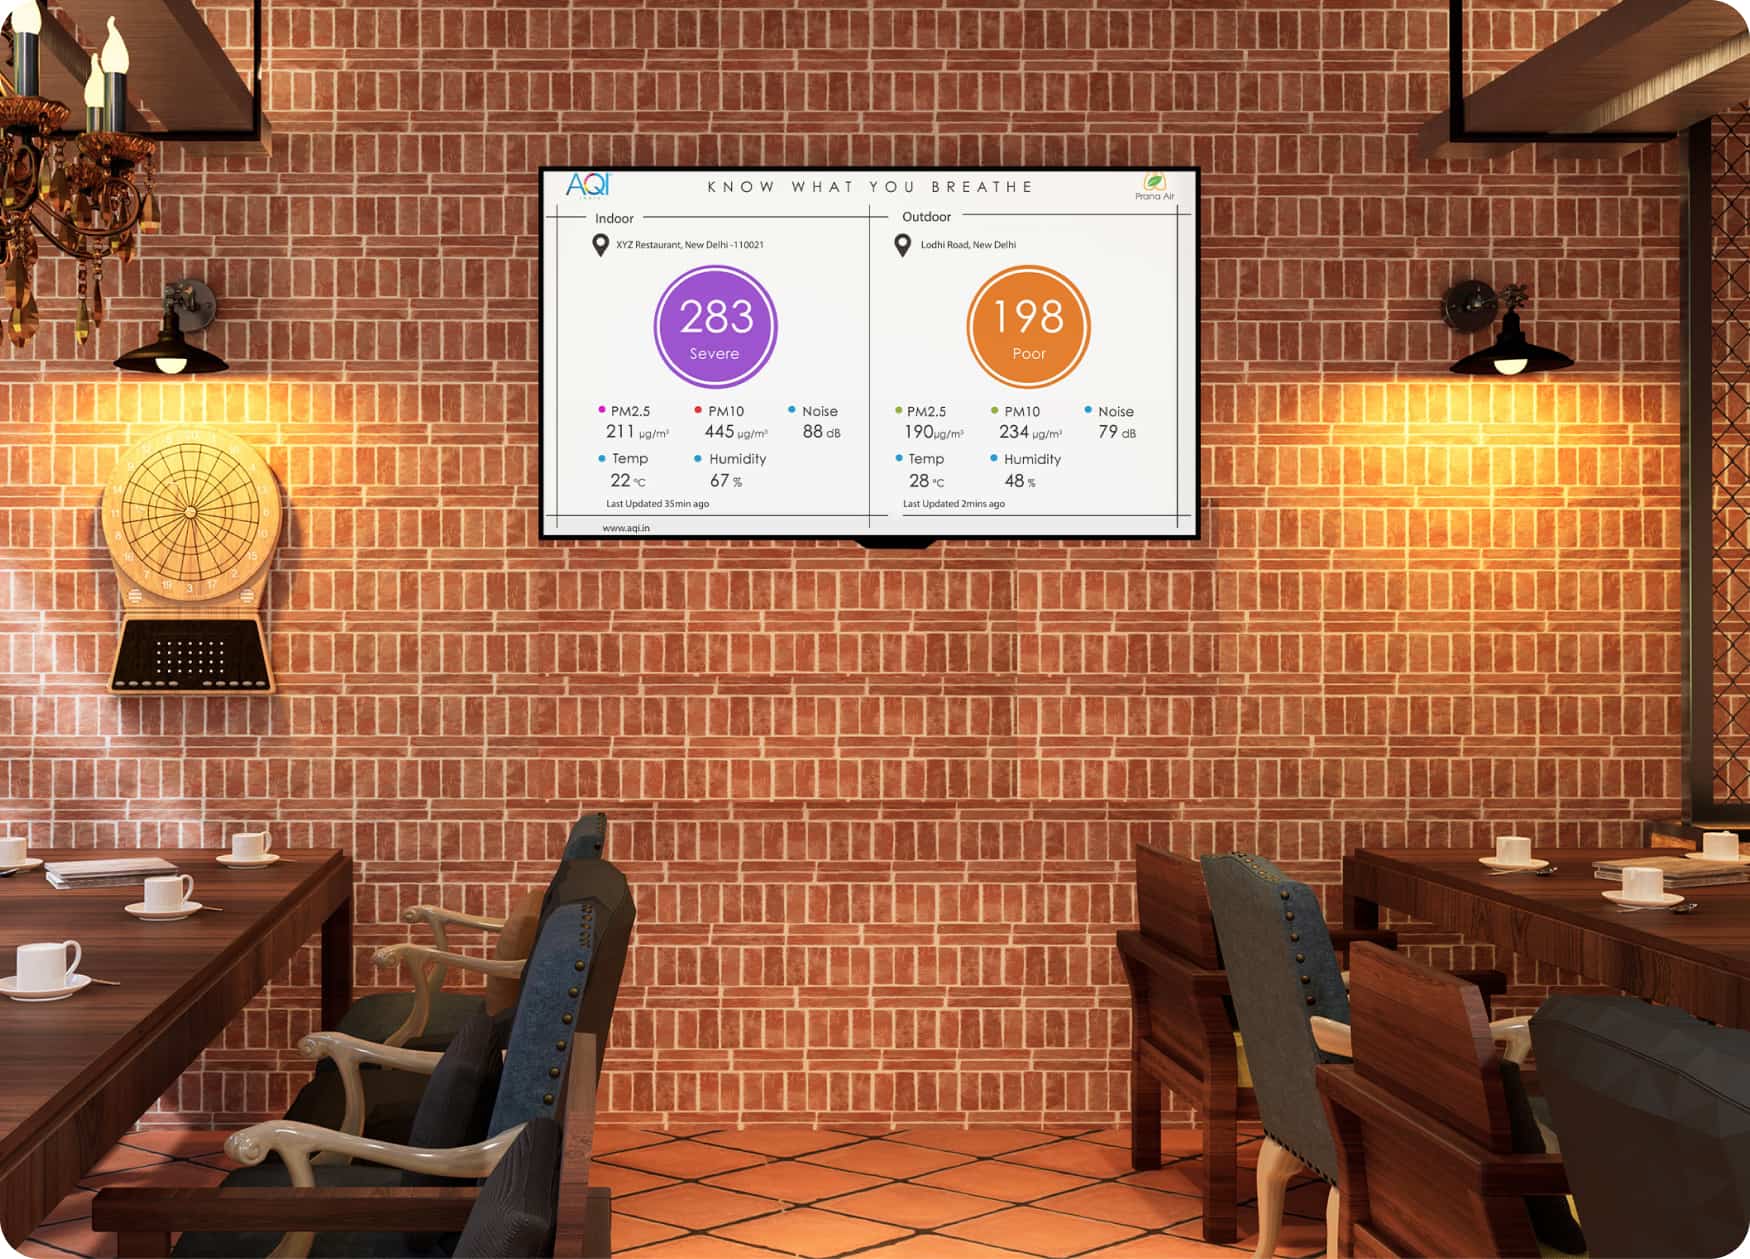 aqi tv app dashboard for restaurants